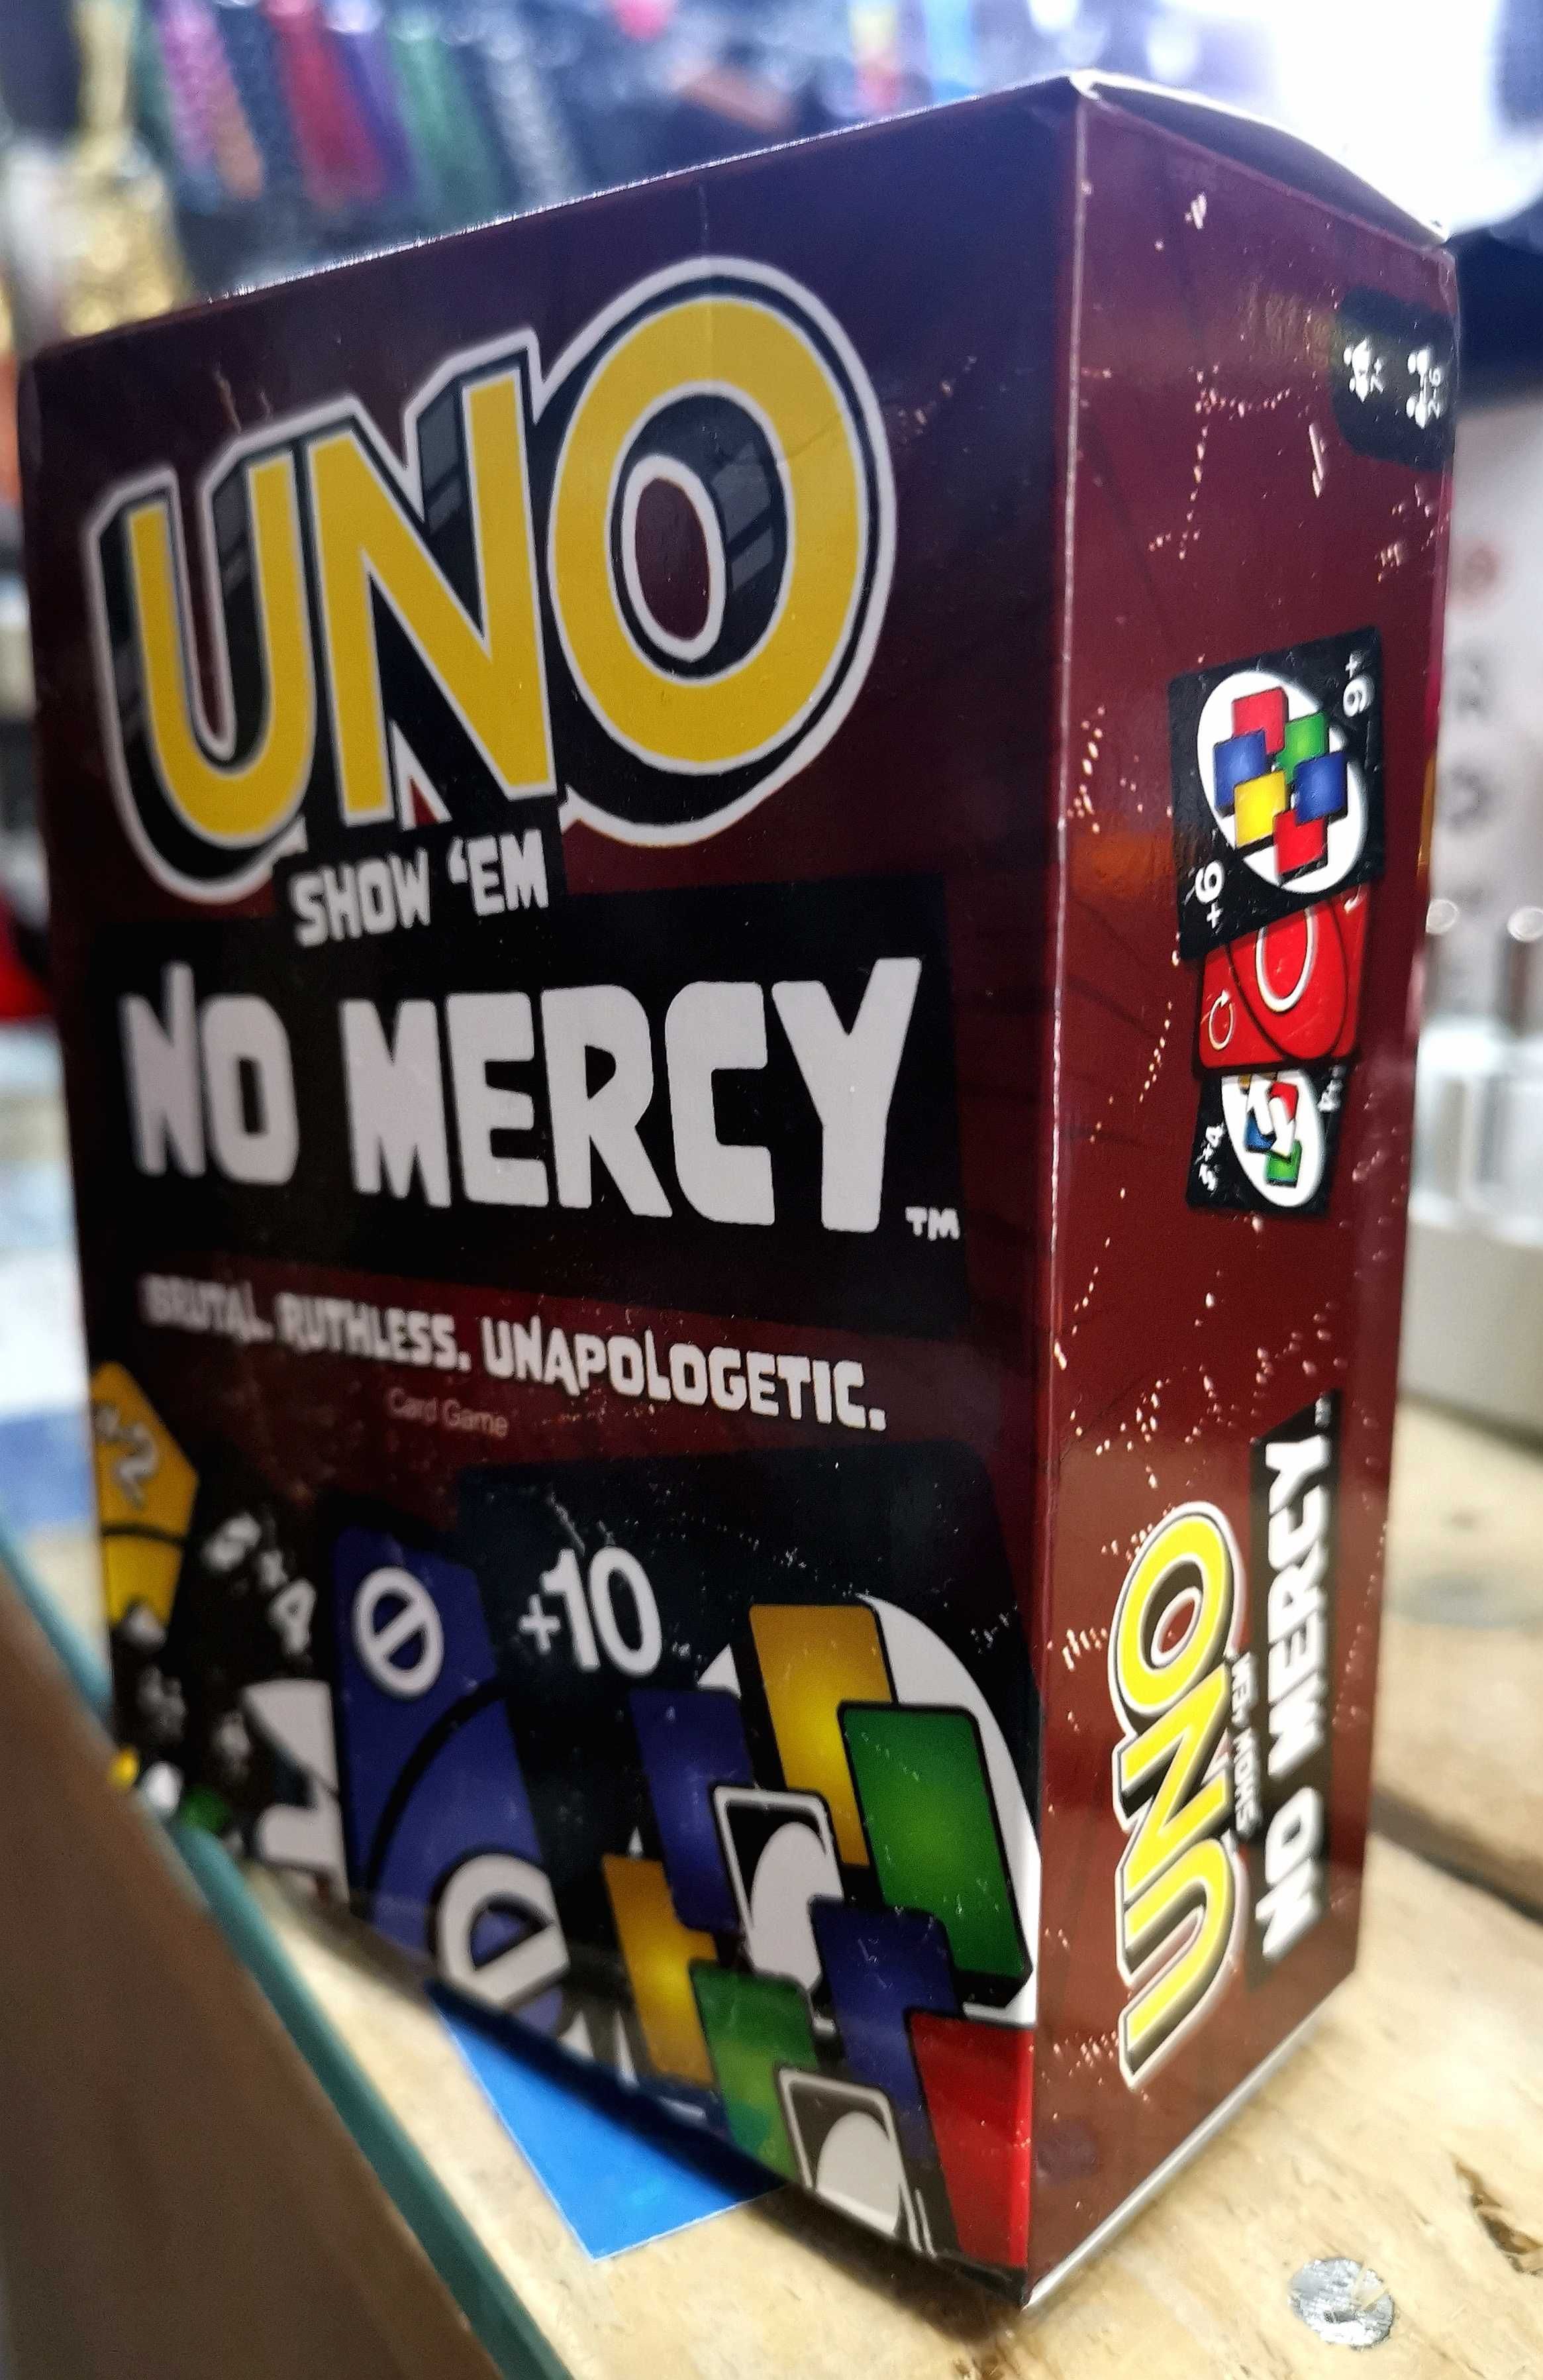 Игра с карти UNO Show 'em No Mercy